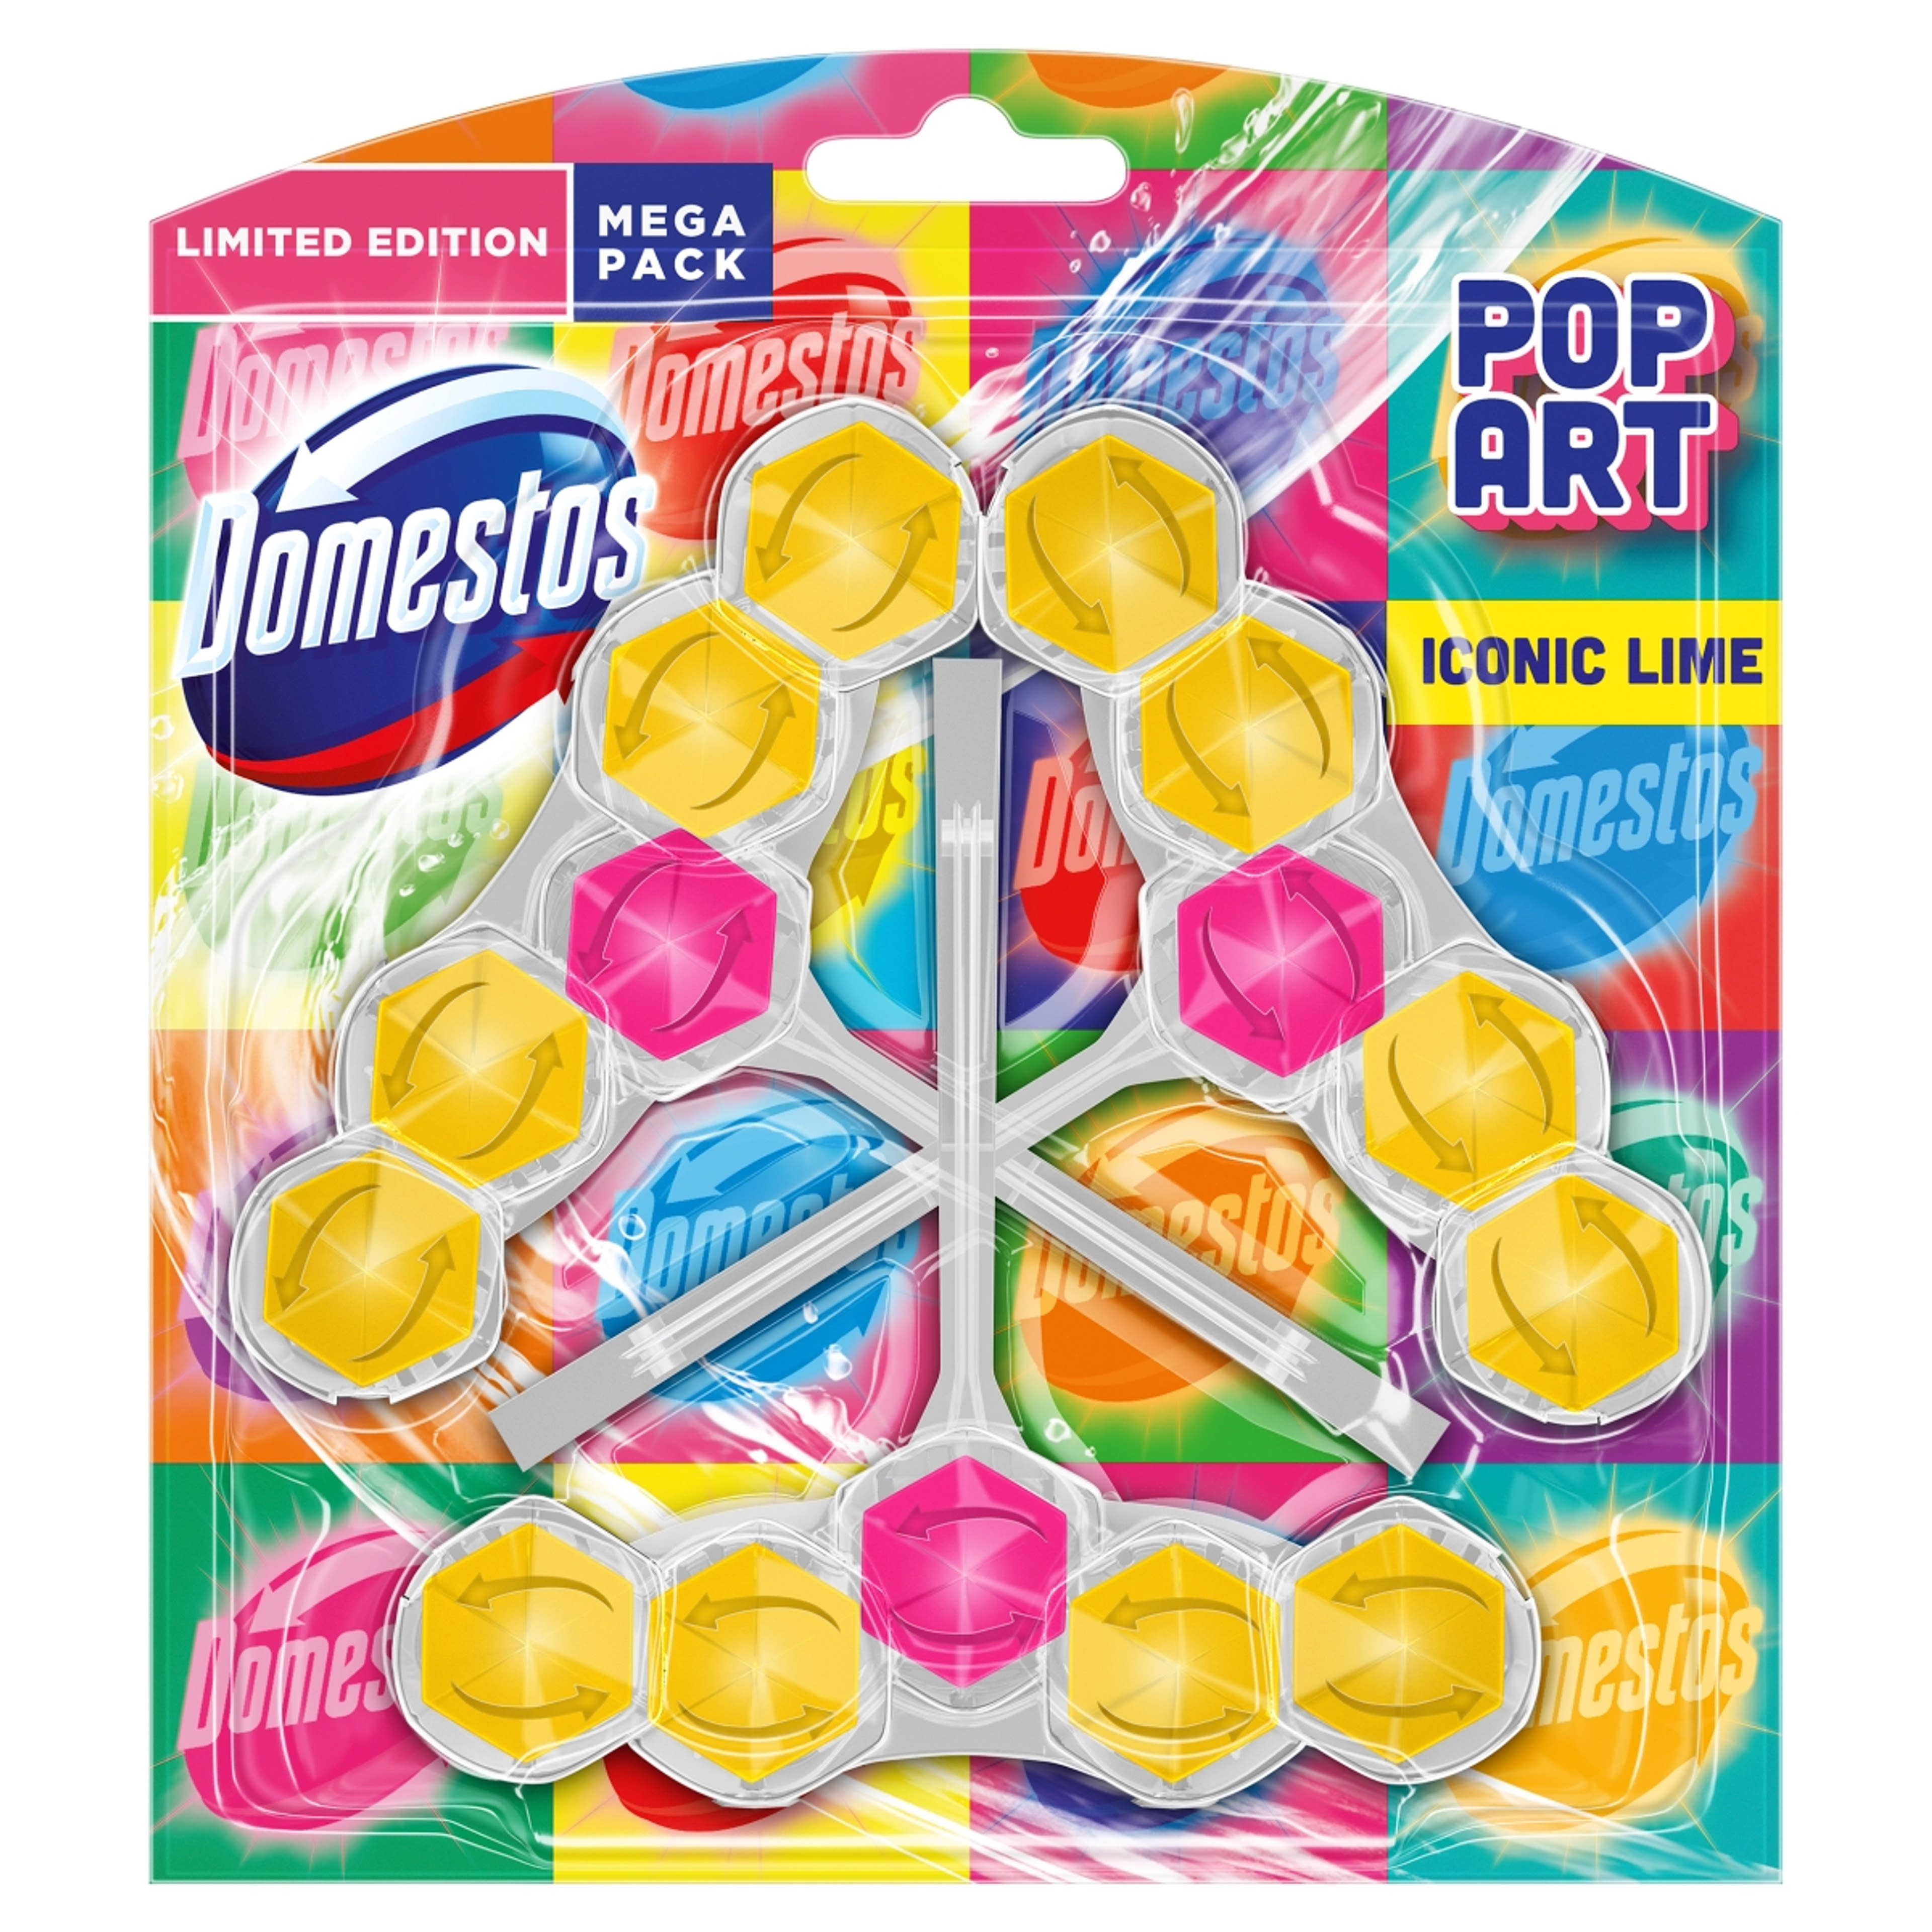 Domestos Full Power Pop Art Iconic Lime WC frissítő (3x55g) - 165 g